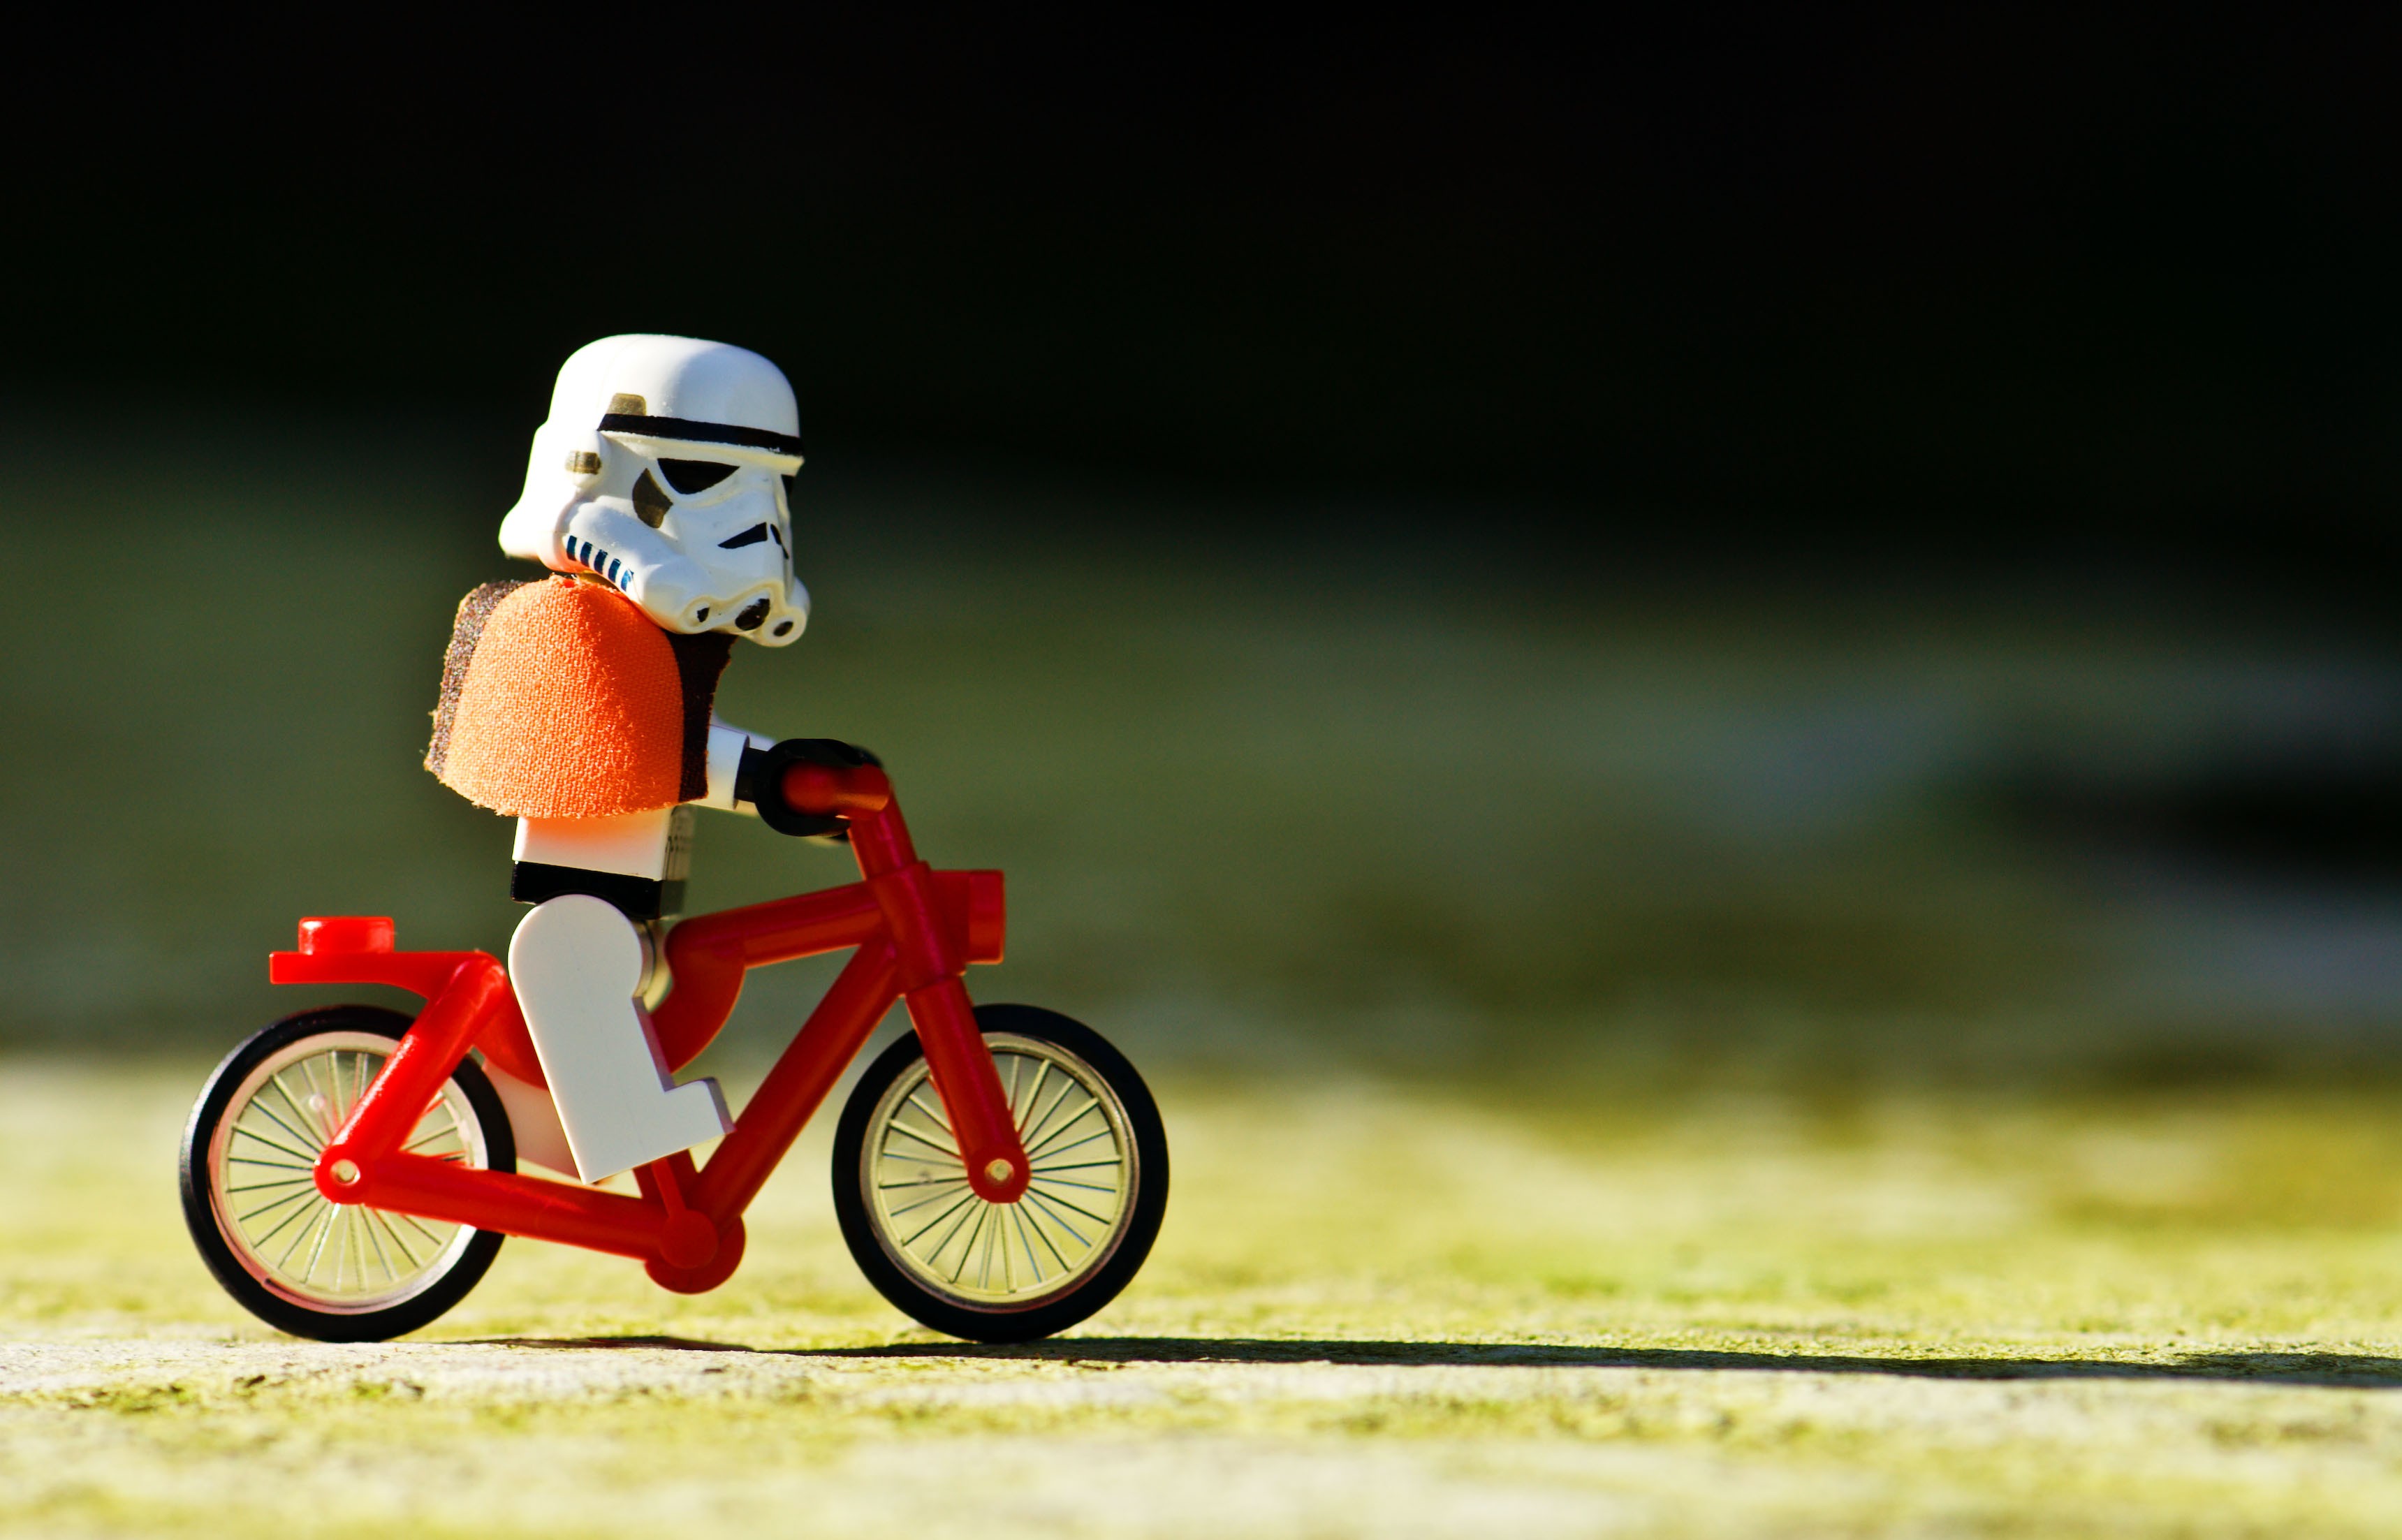 General 3439x2205 stormtrooper LEGO Star Wars toys bicycle vehicle LEGO Star Wars Imperial Stormtrooper